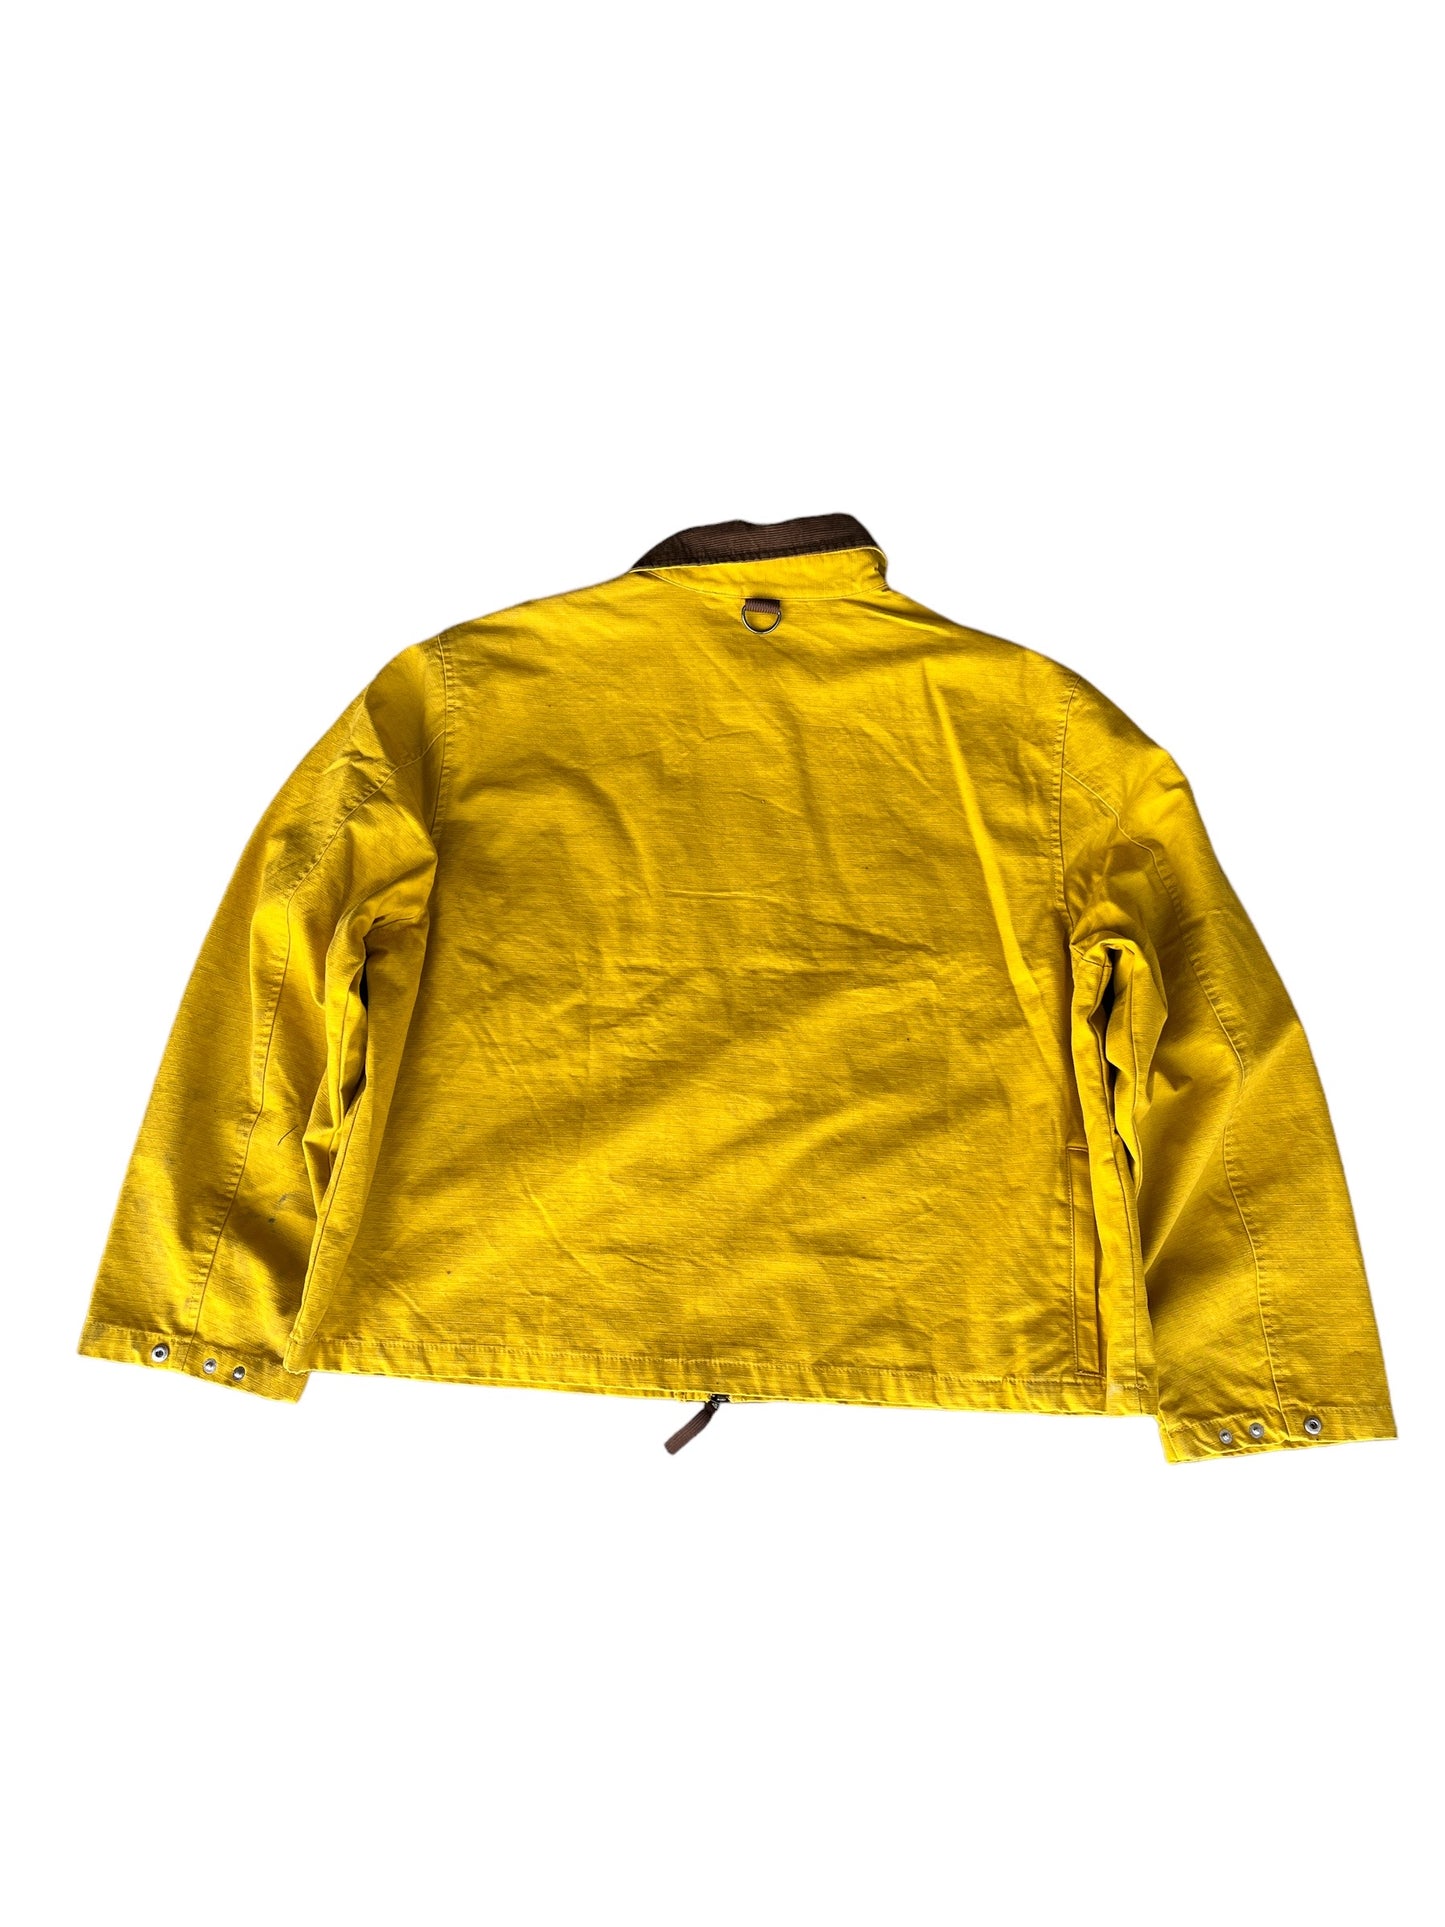 Levi's Fisherman Jacket Mustard Yellow